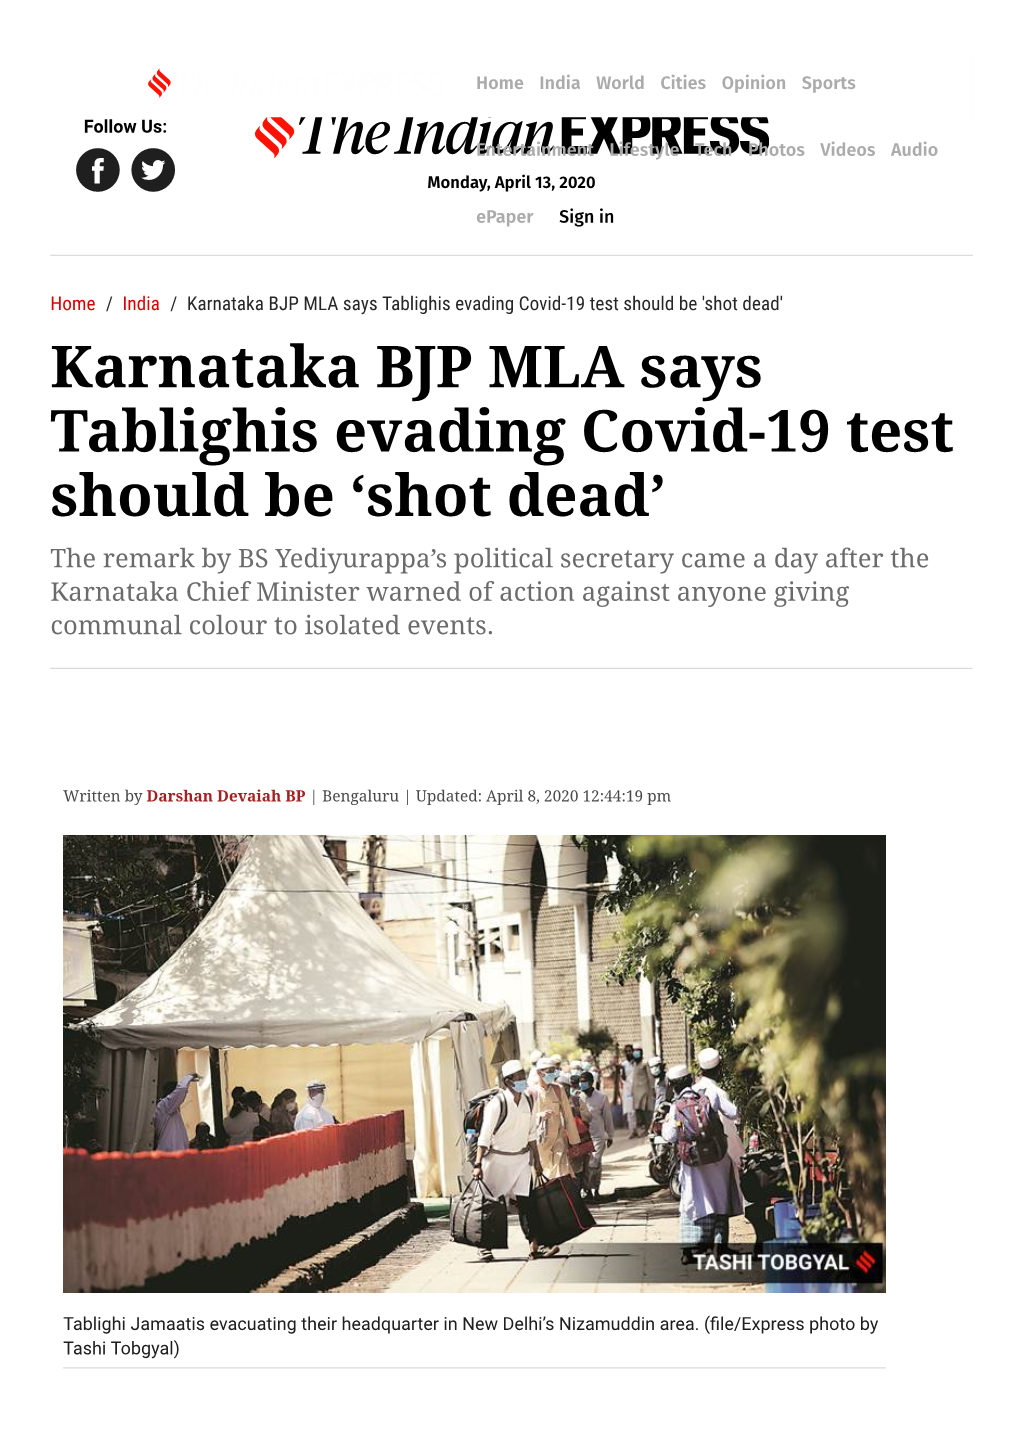 Karnataka BJP MLA Says Tablighis Evading Covid-19 Test Should Be